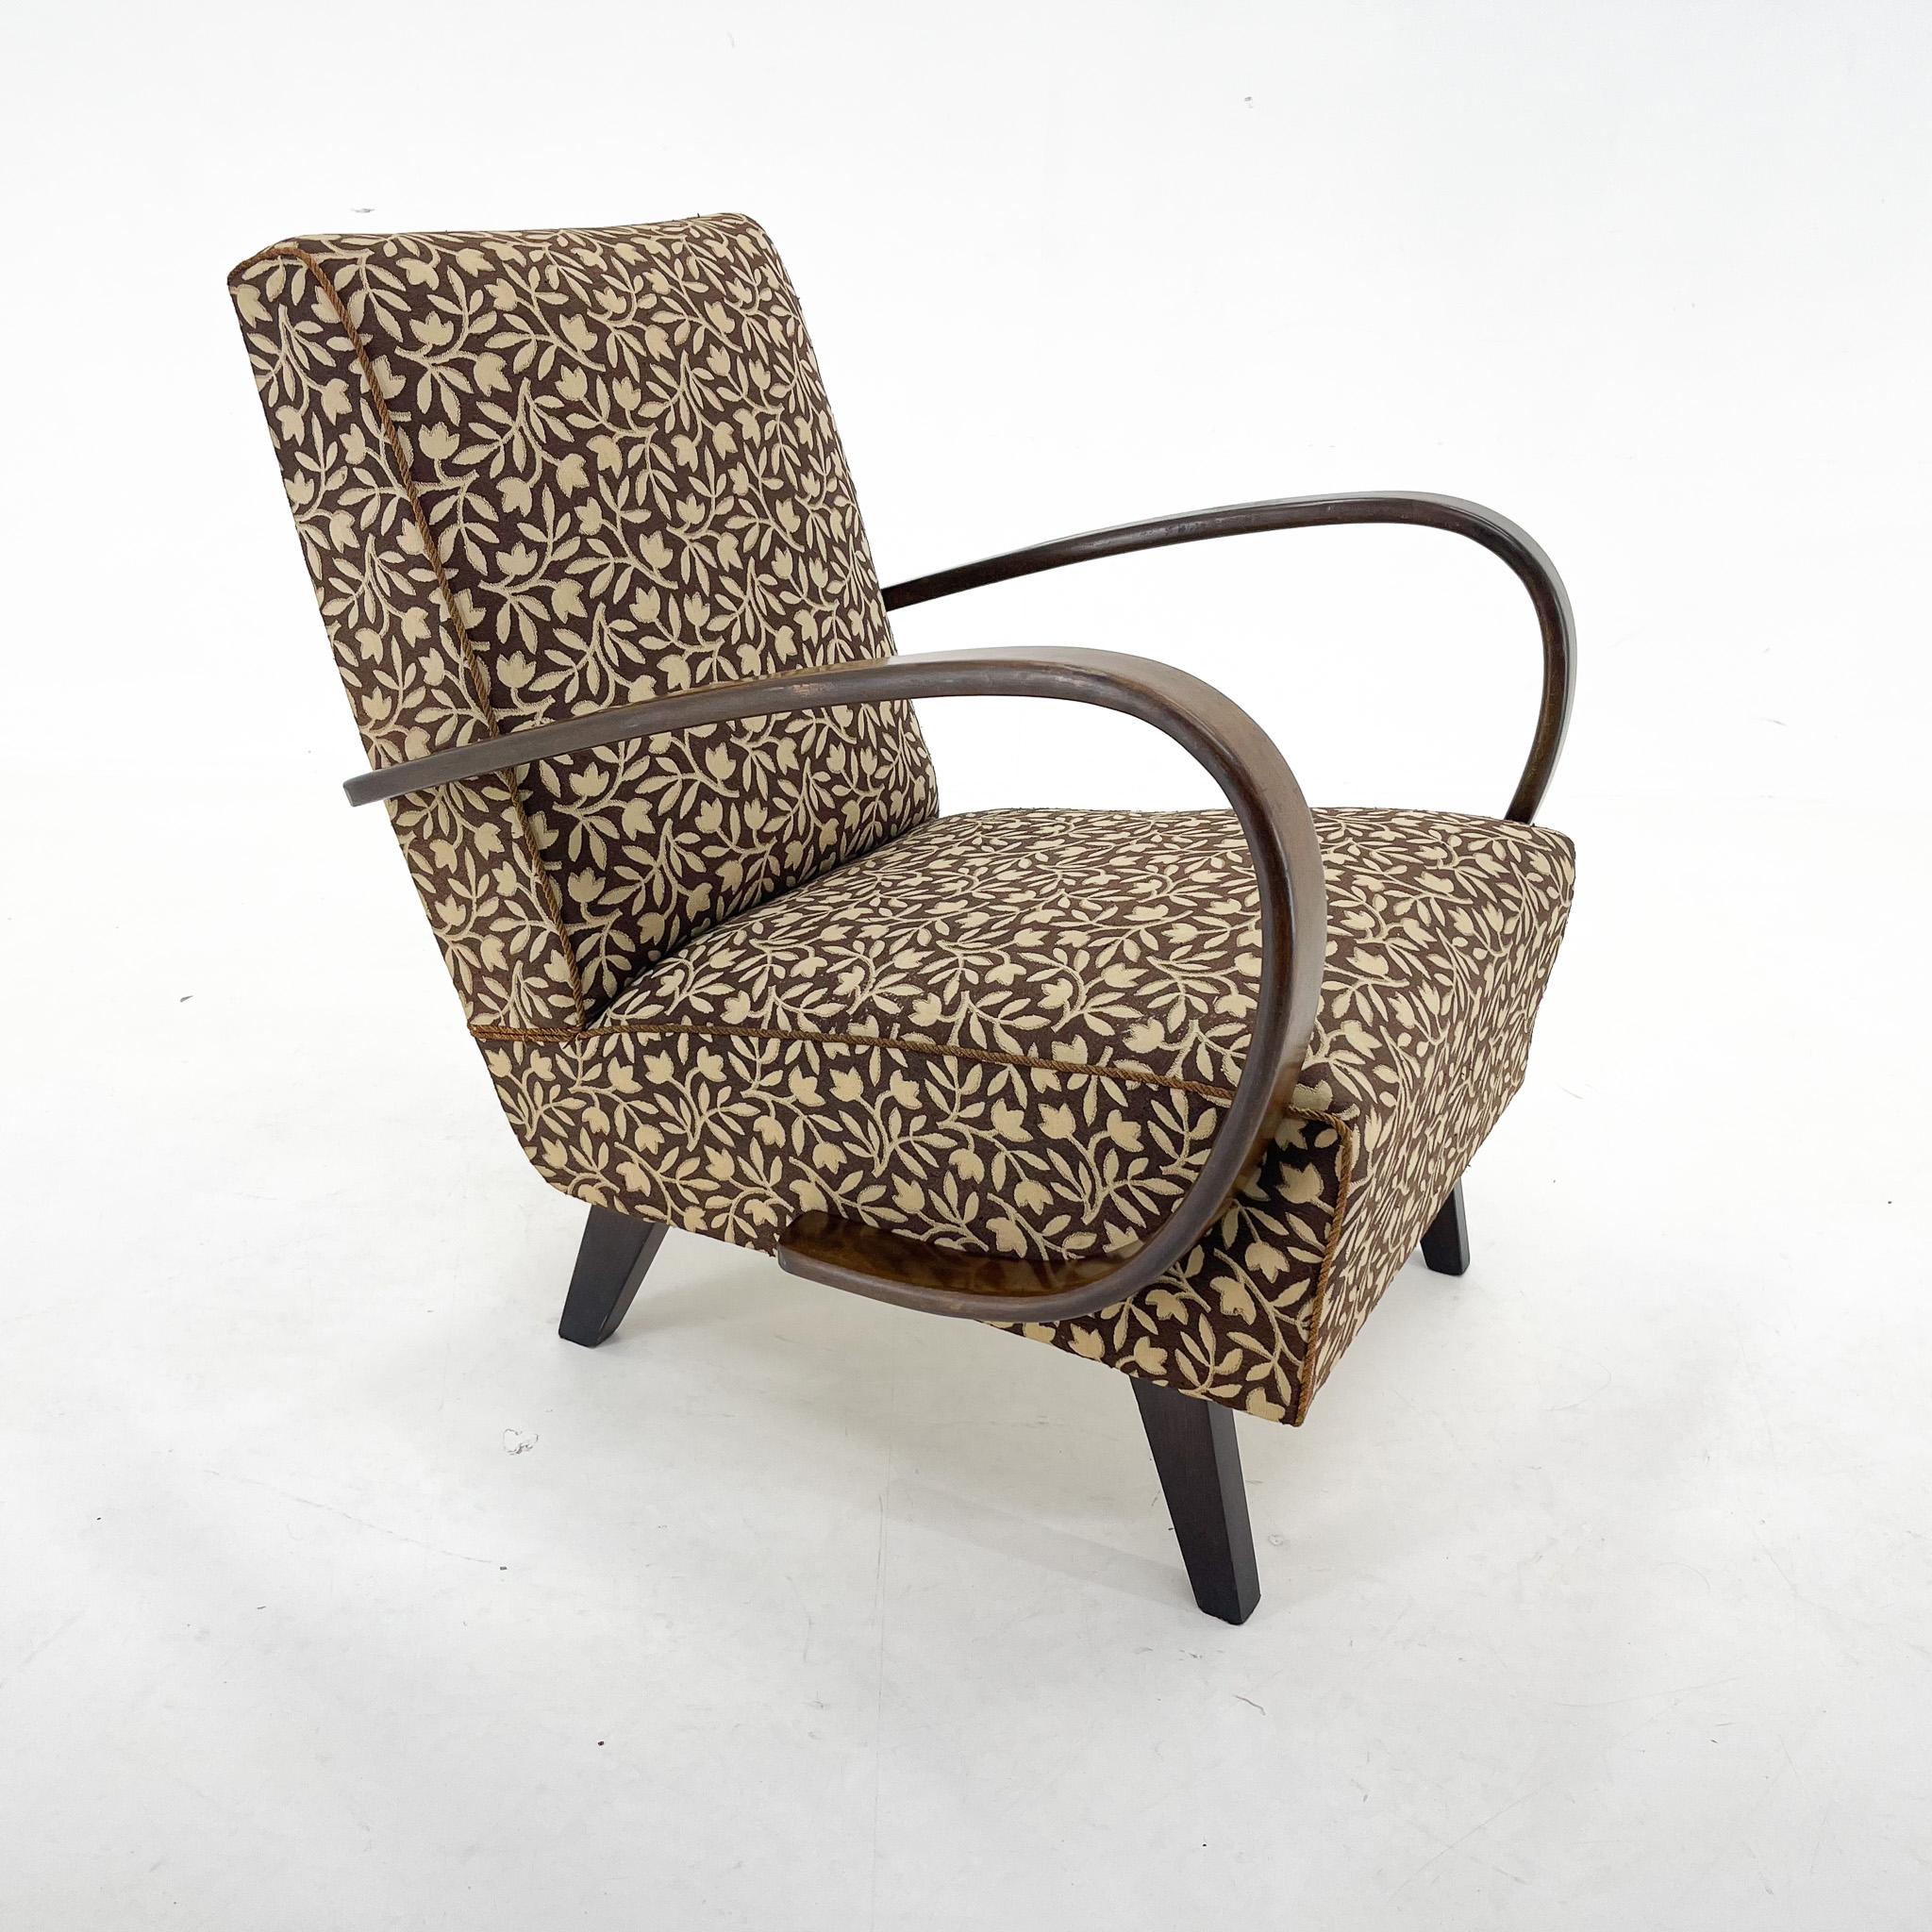 Vintage, midcentury armchair designed by famous Jindrich Halabala. 
Original, good condition.